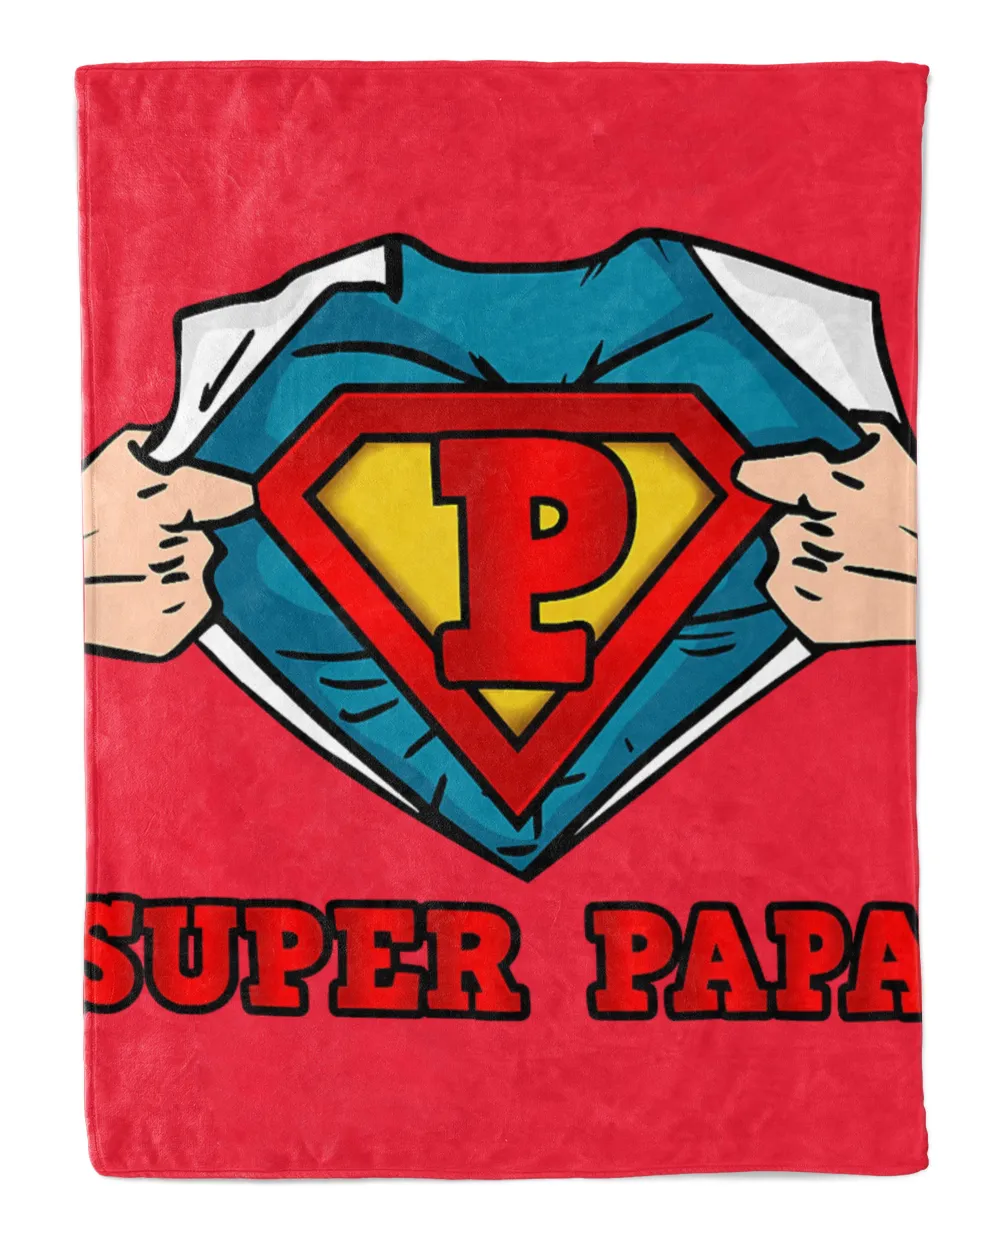 Mens SUPERHERO SUPER PAPA T-SHIRT - GREAT GIFT FOR DAD